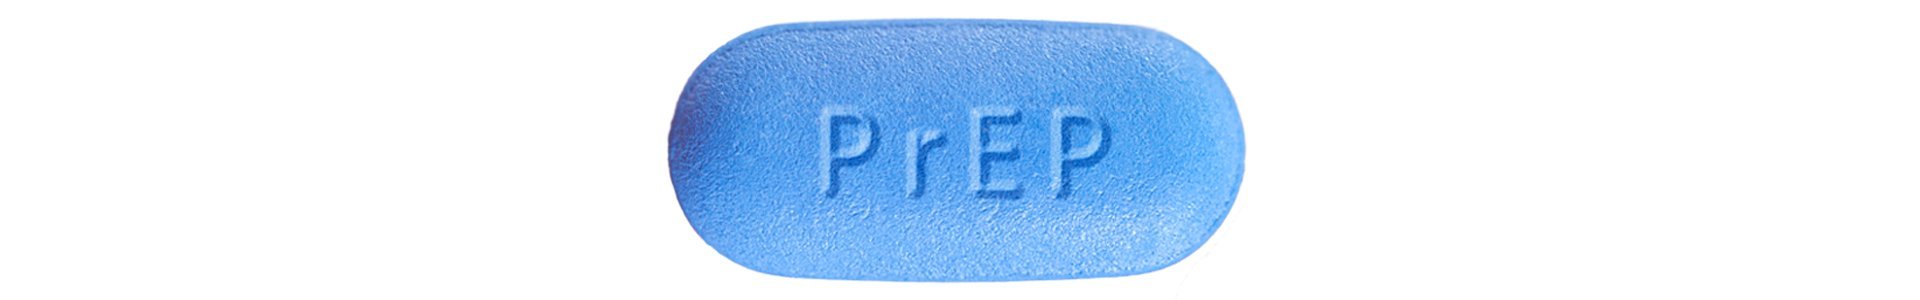 Prep anti HIV pill